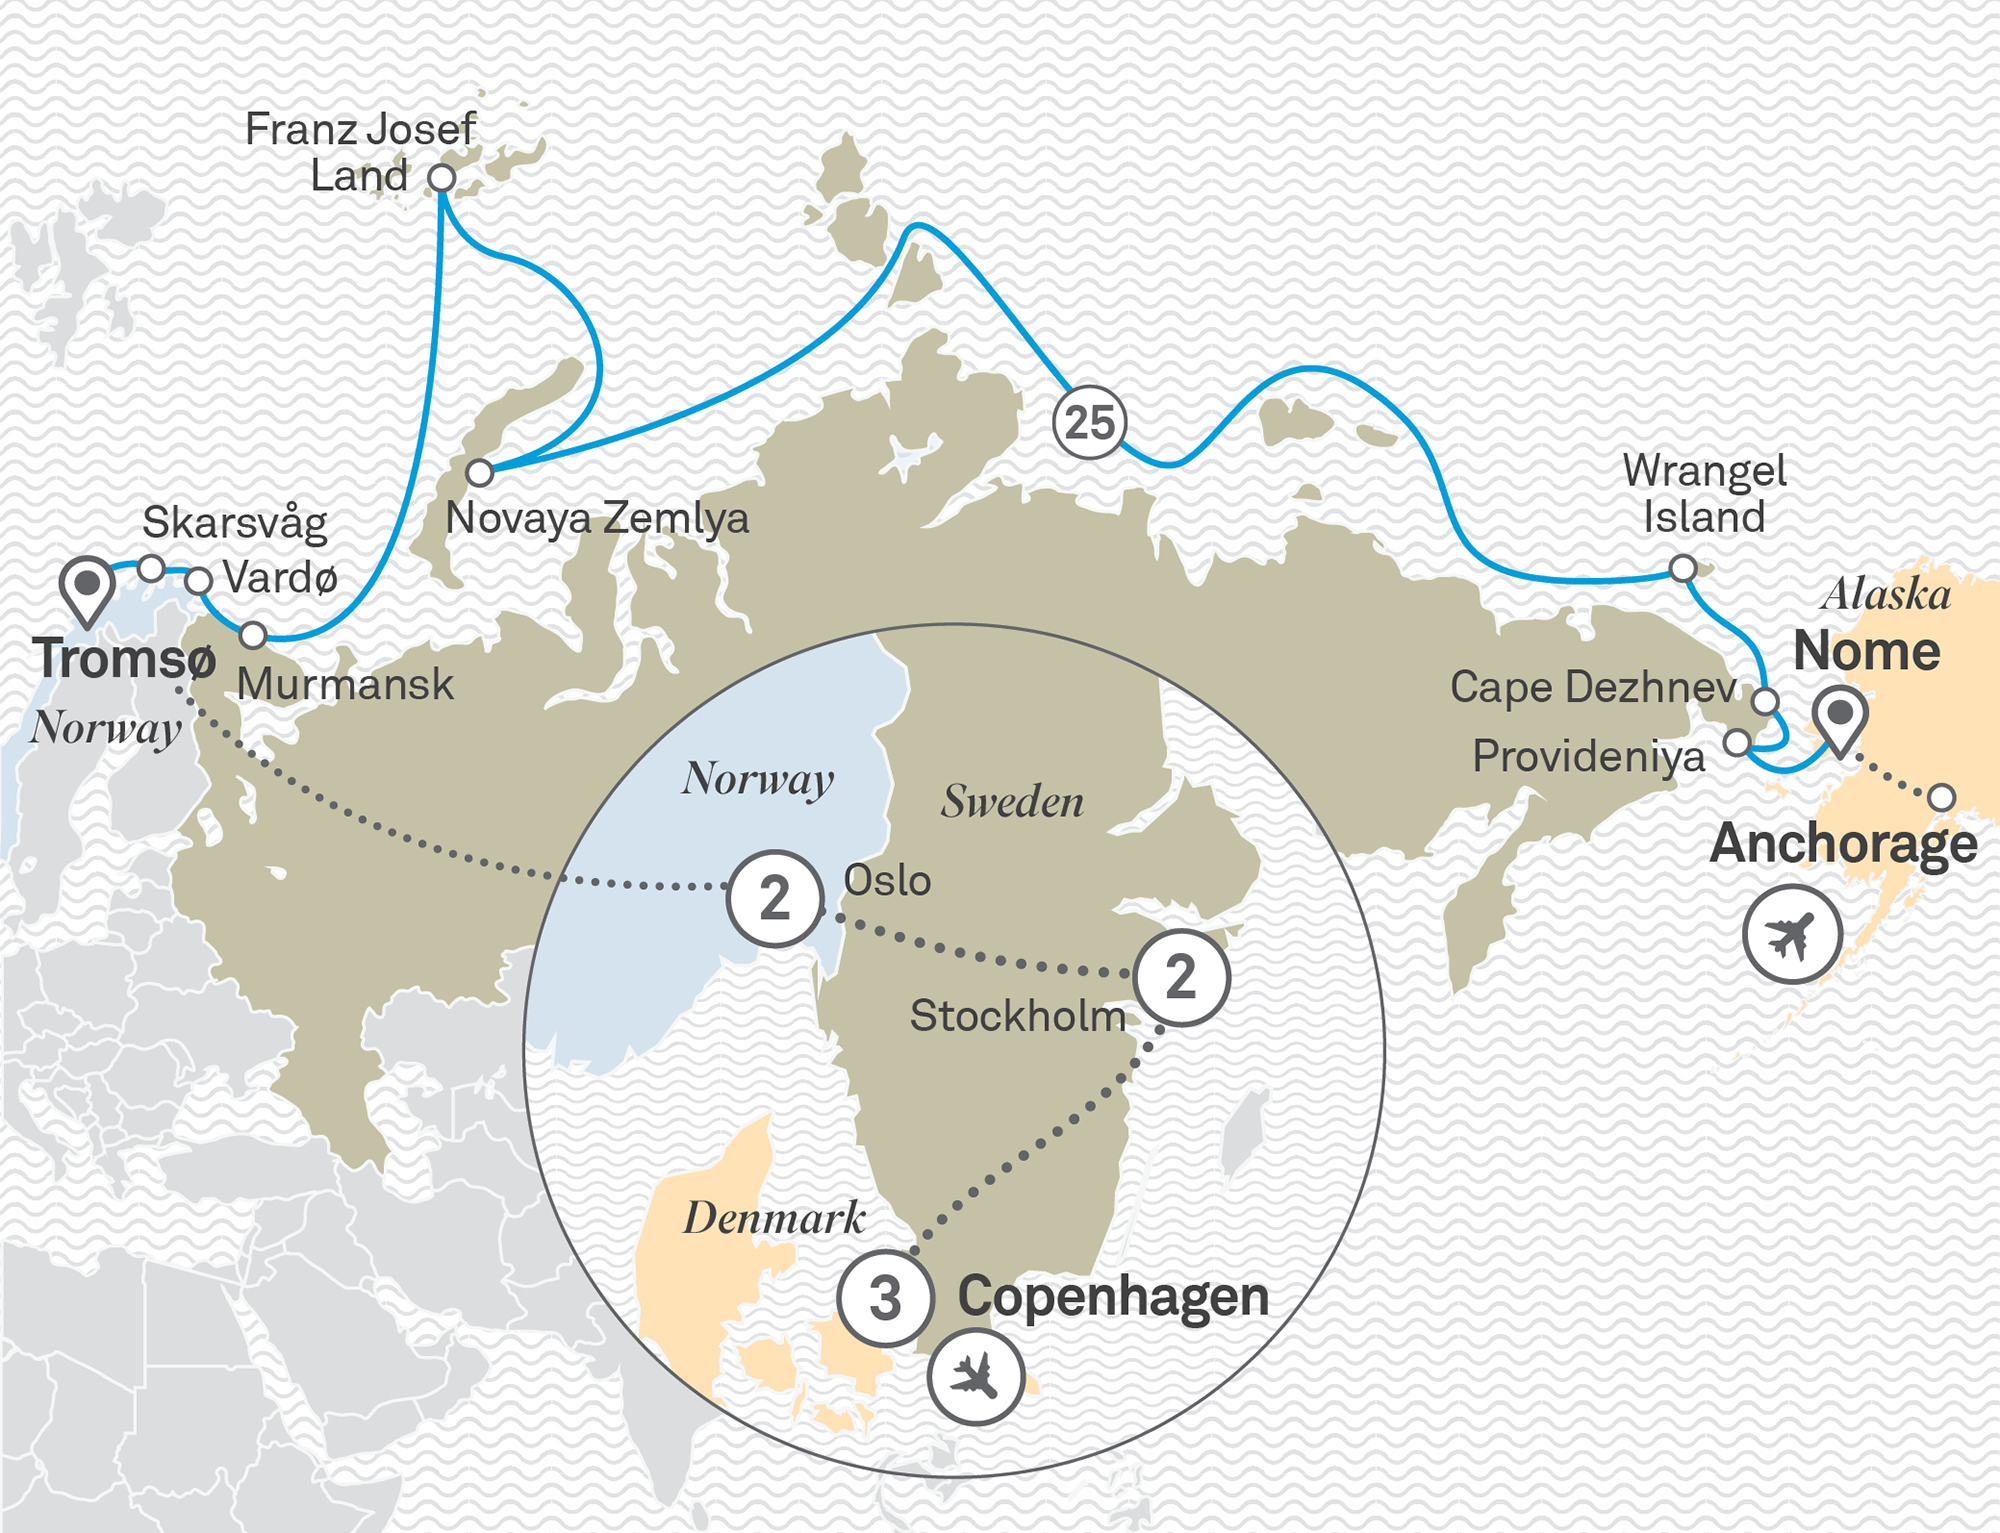 Cross the Legendary Northeast Passage with Scandinavian